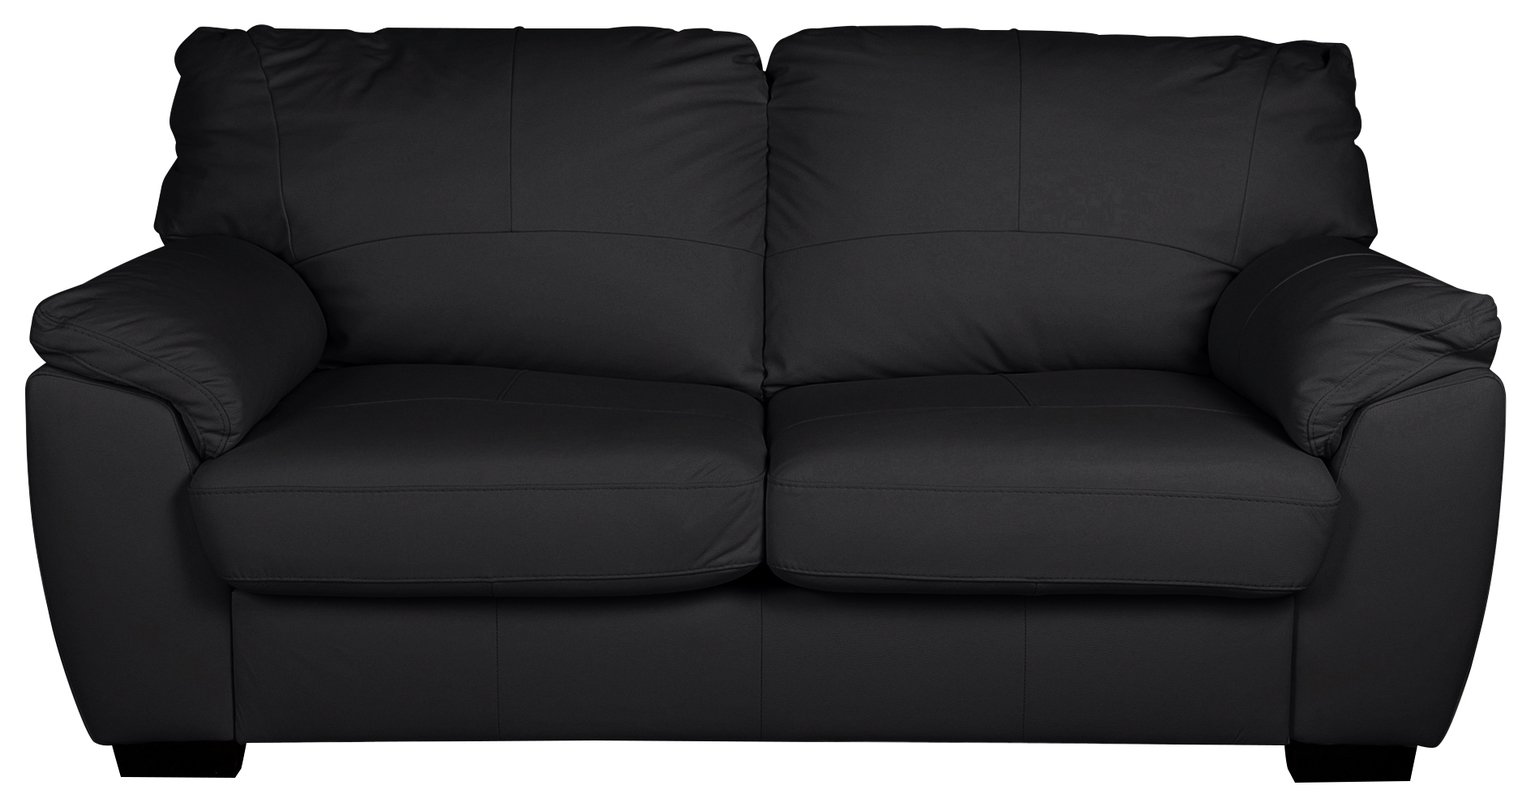 Argos Home Milano 2 Seater Leather Sofa Bed - Black